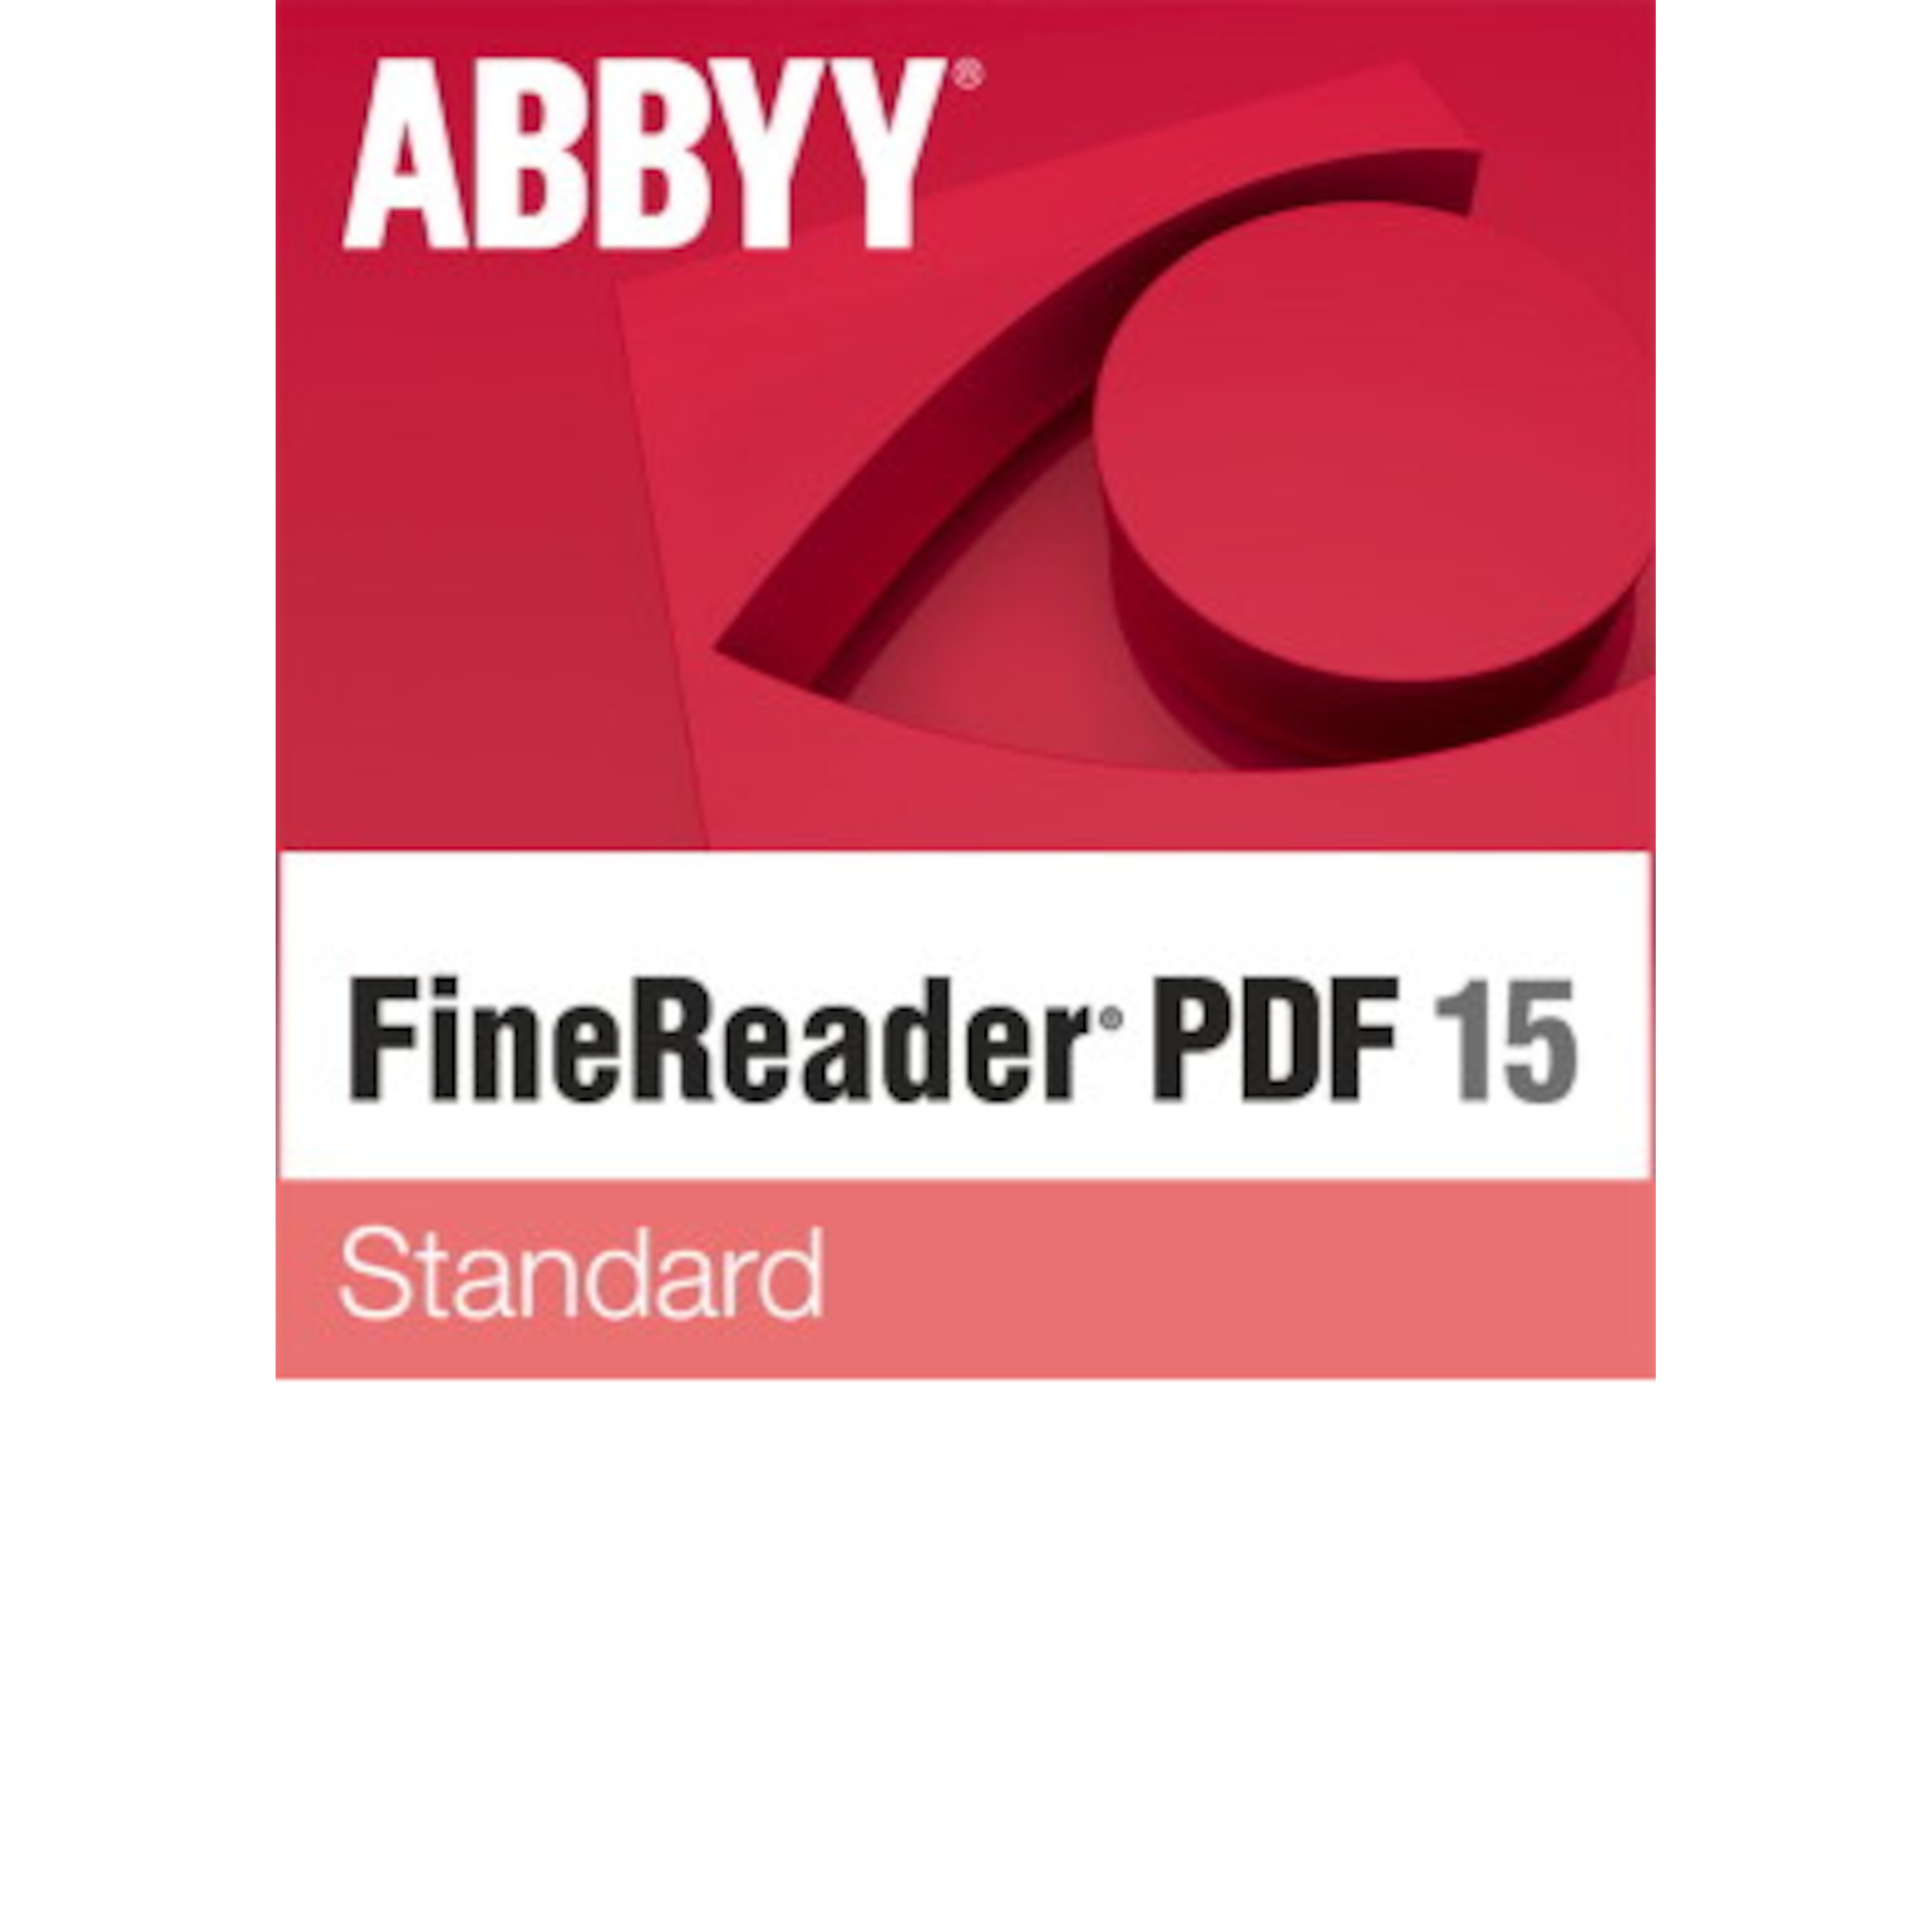 abbyy finereader pdf 15 standard